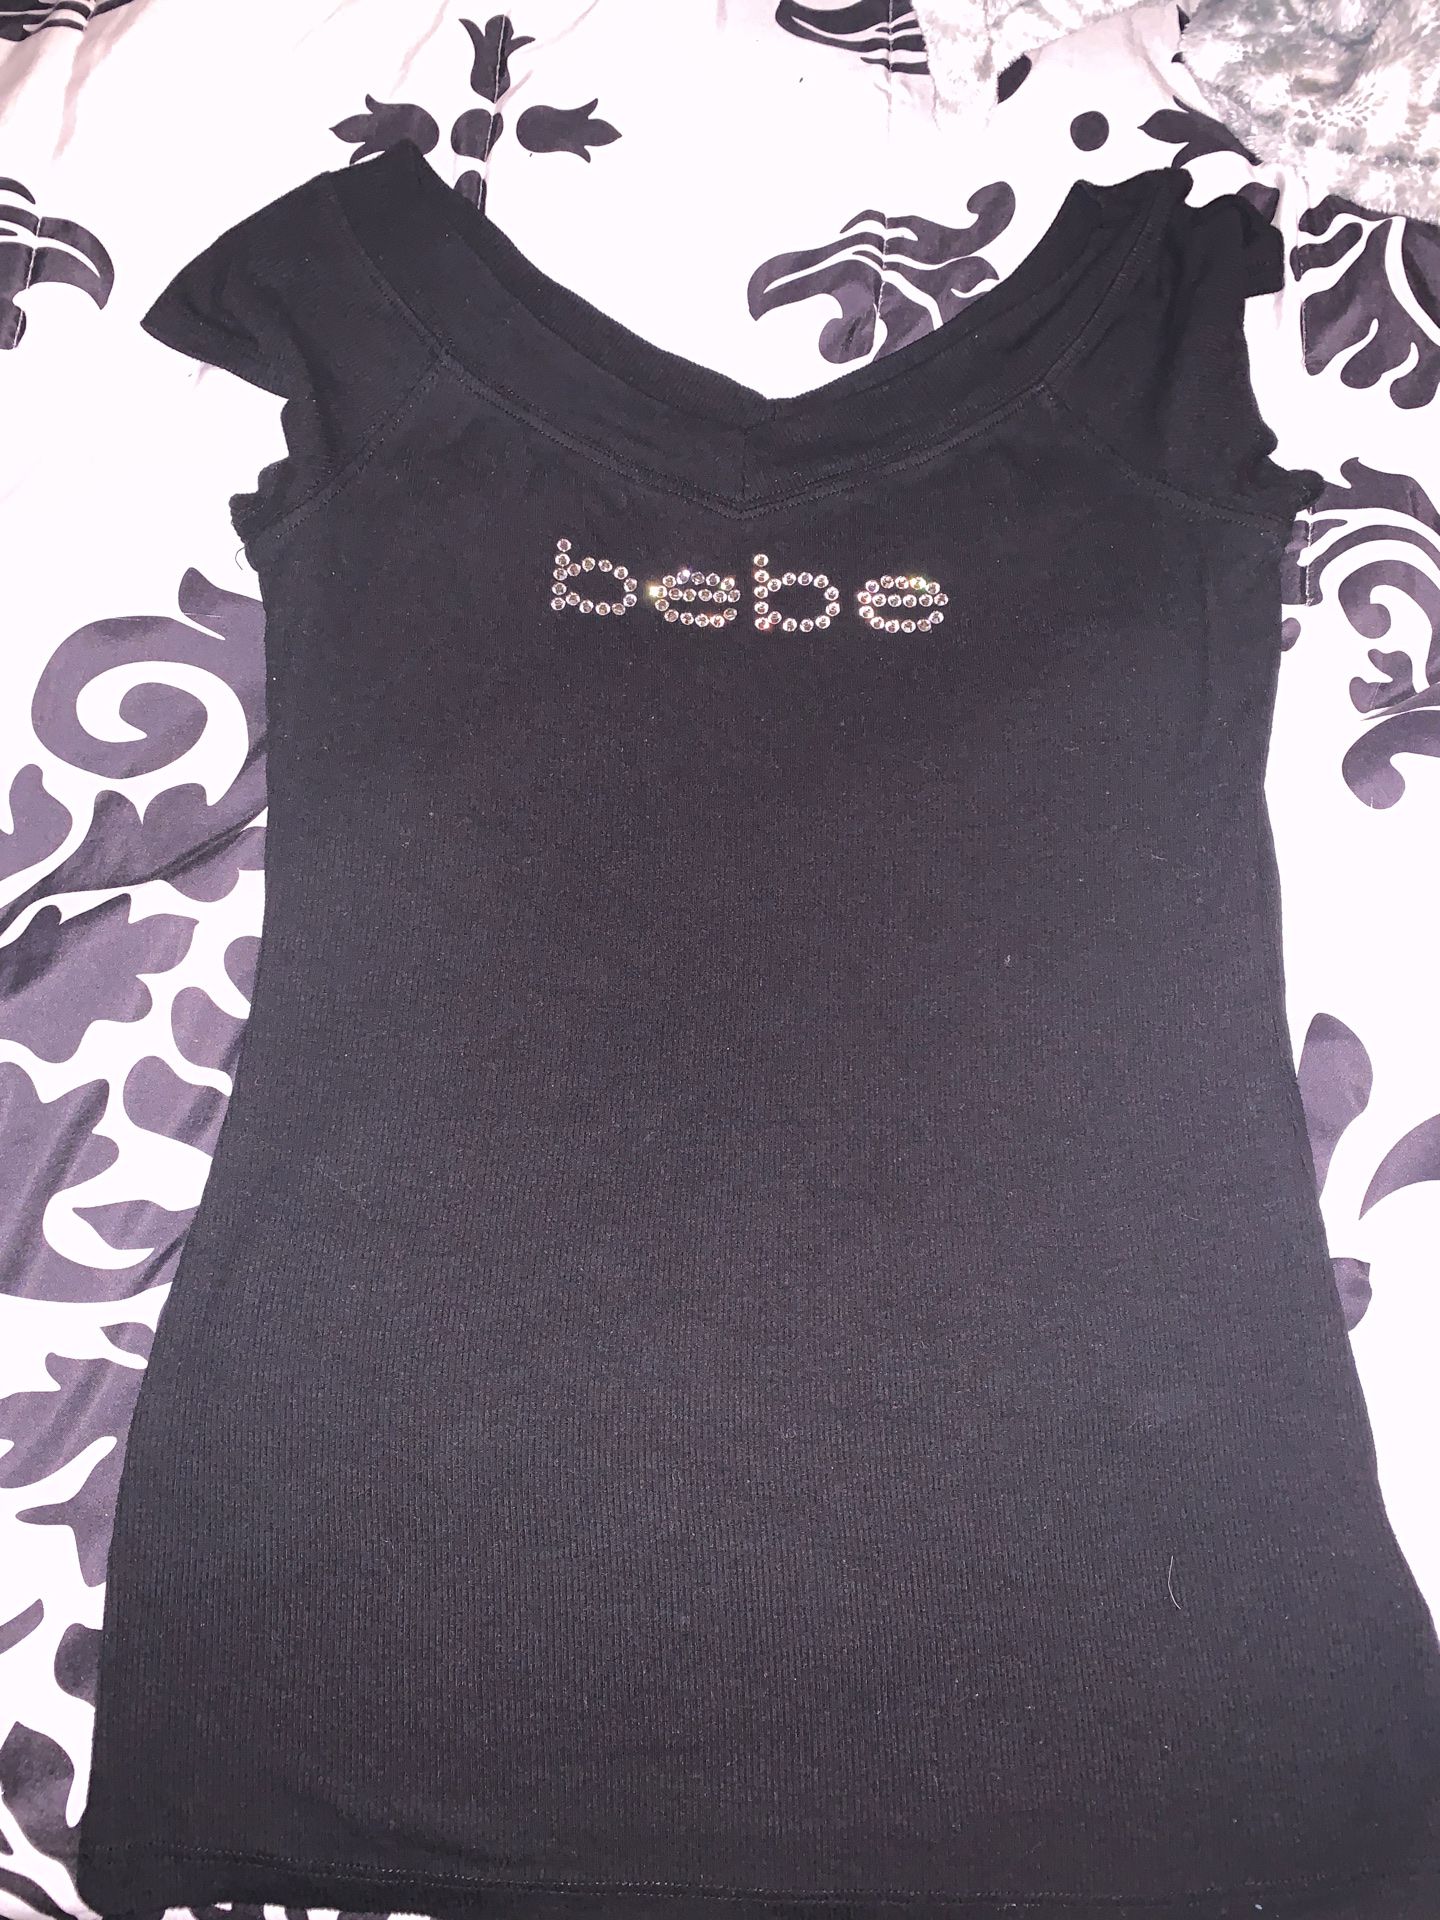 Large BEBE shirt